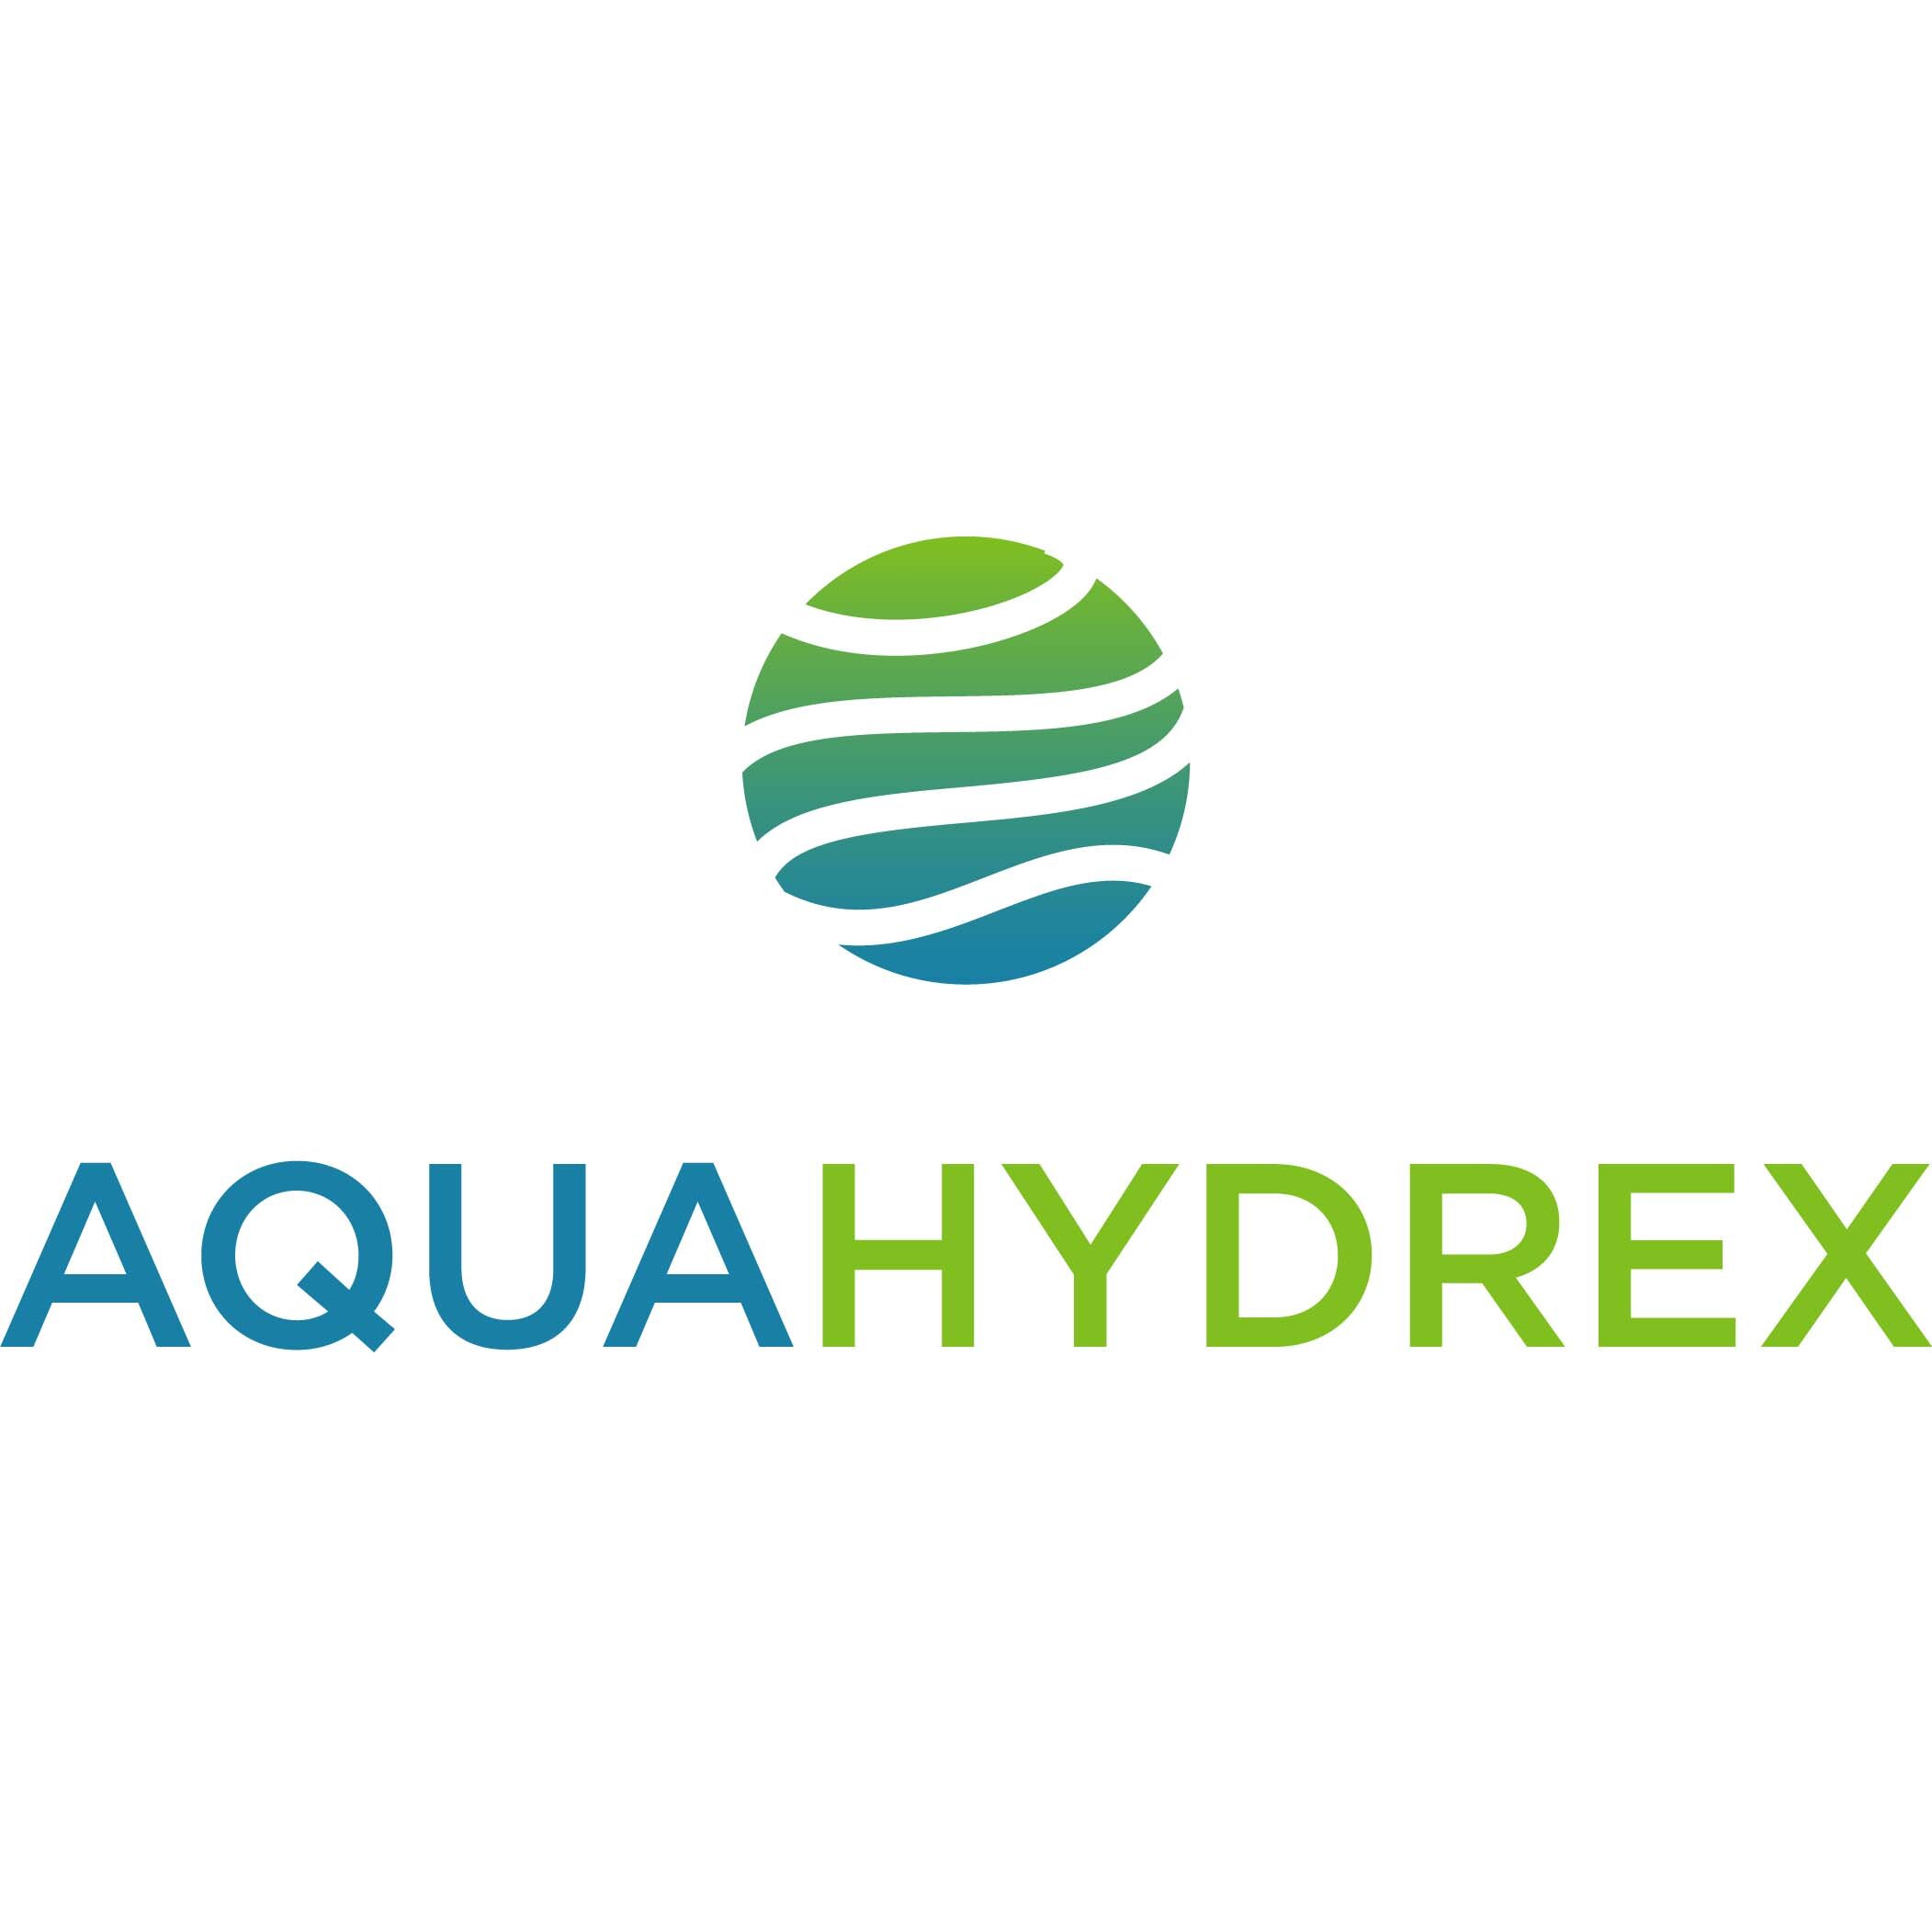 AquaHydrex-Square.jpg